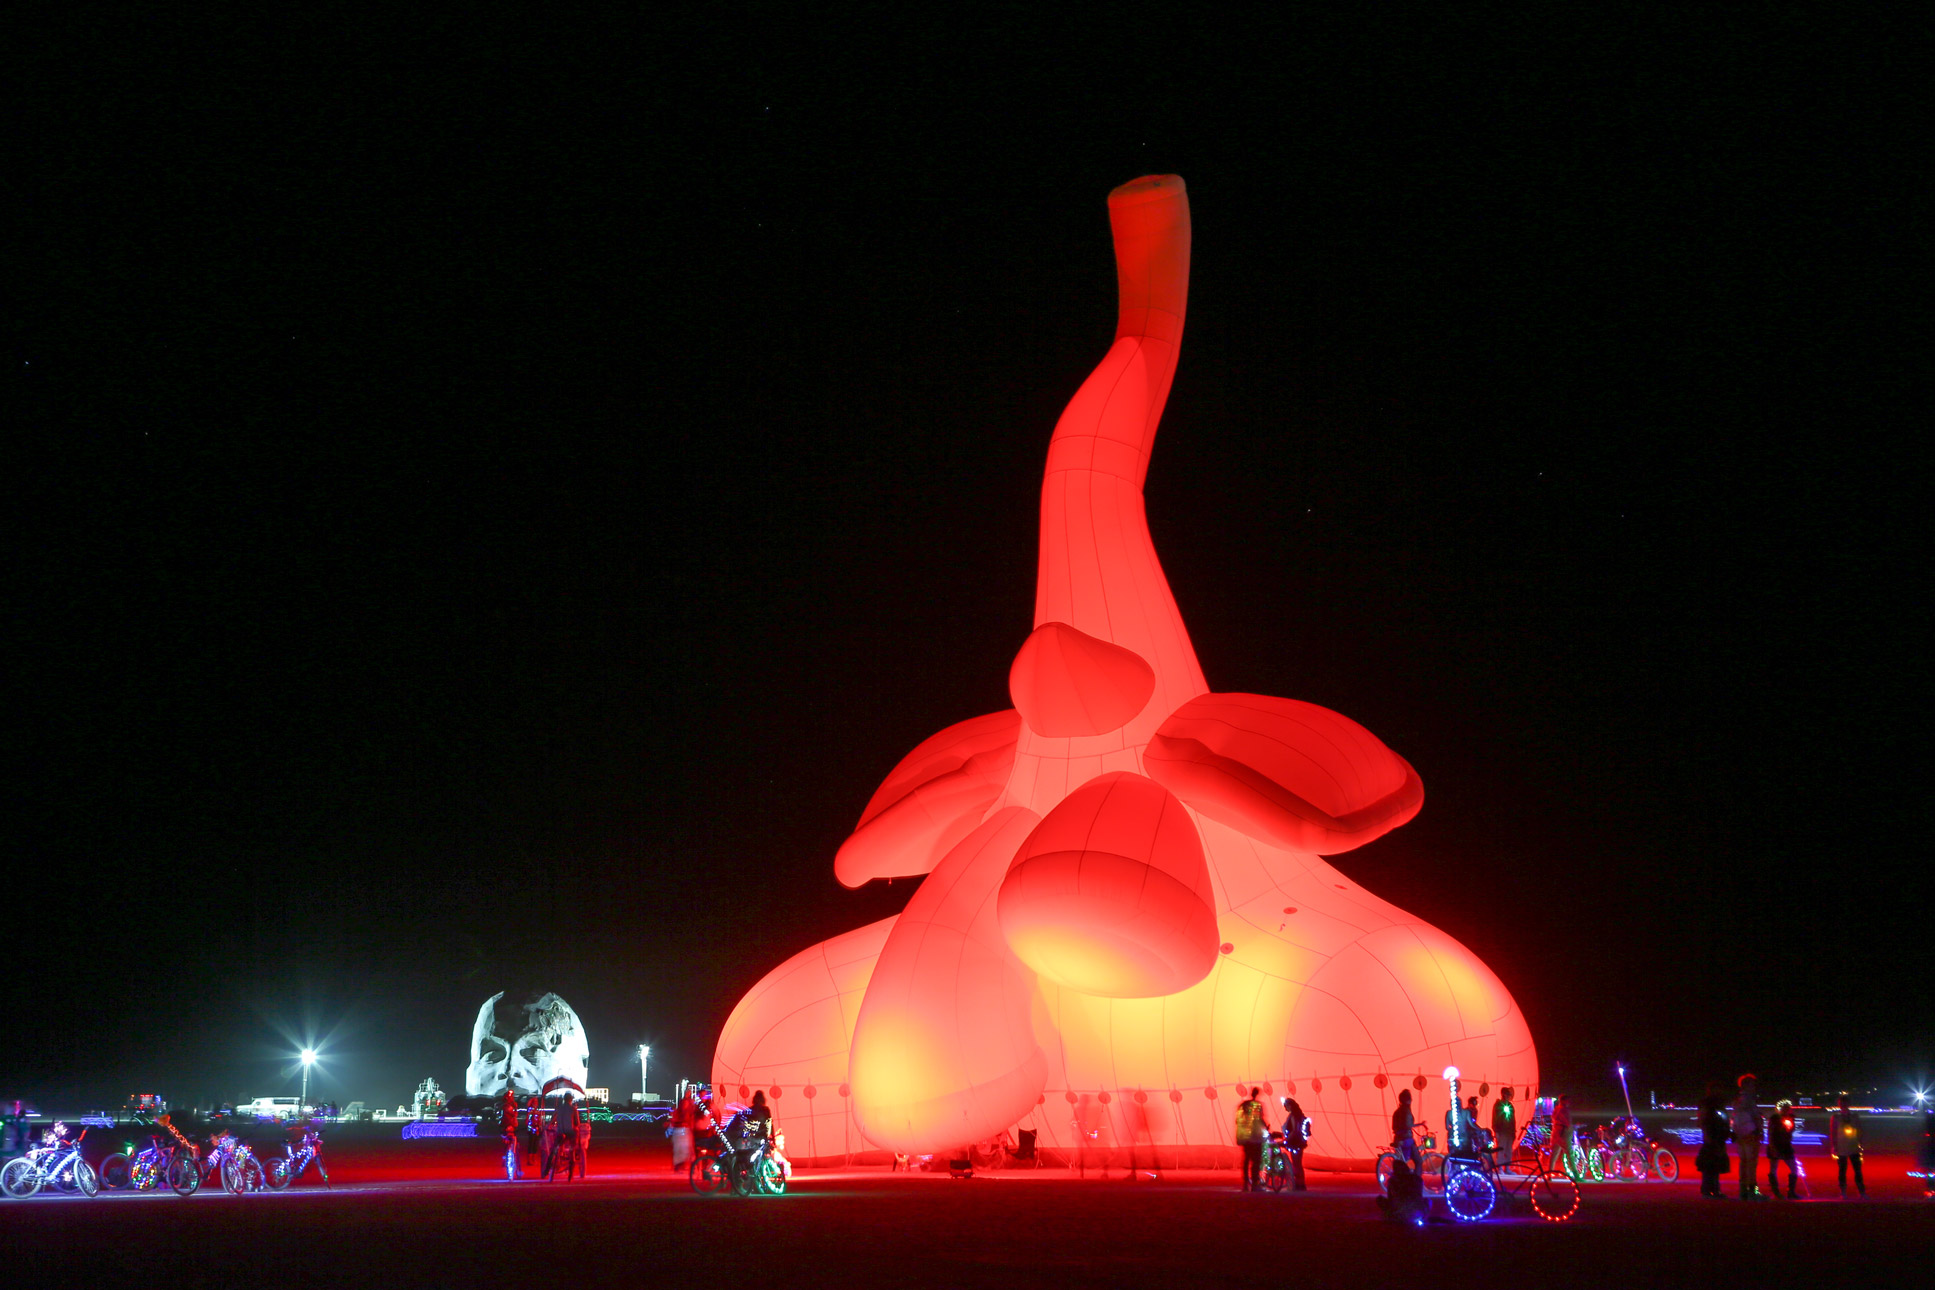 Elephant Sculpture at Burning Man 2019